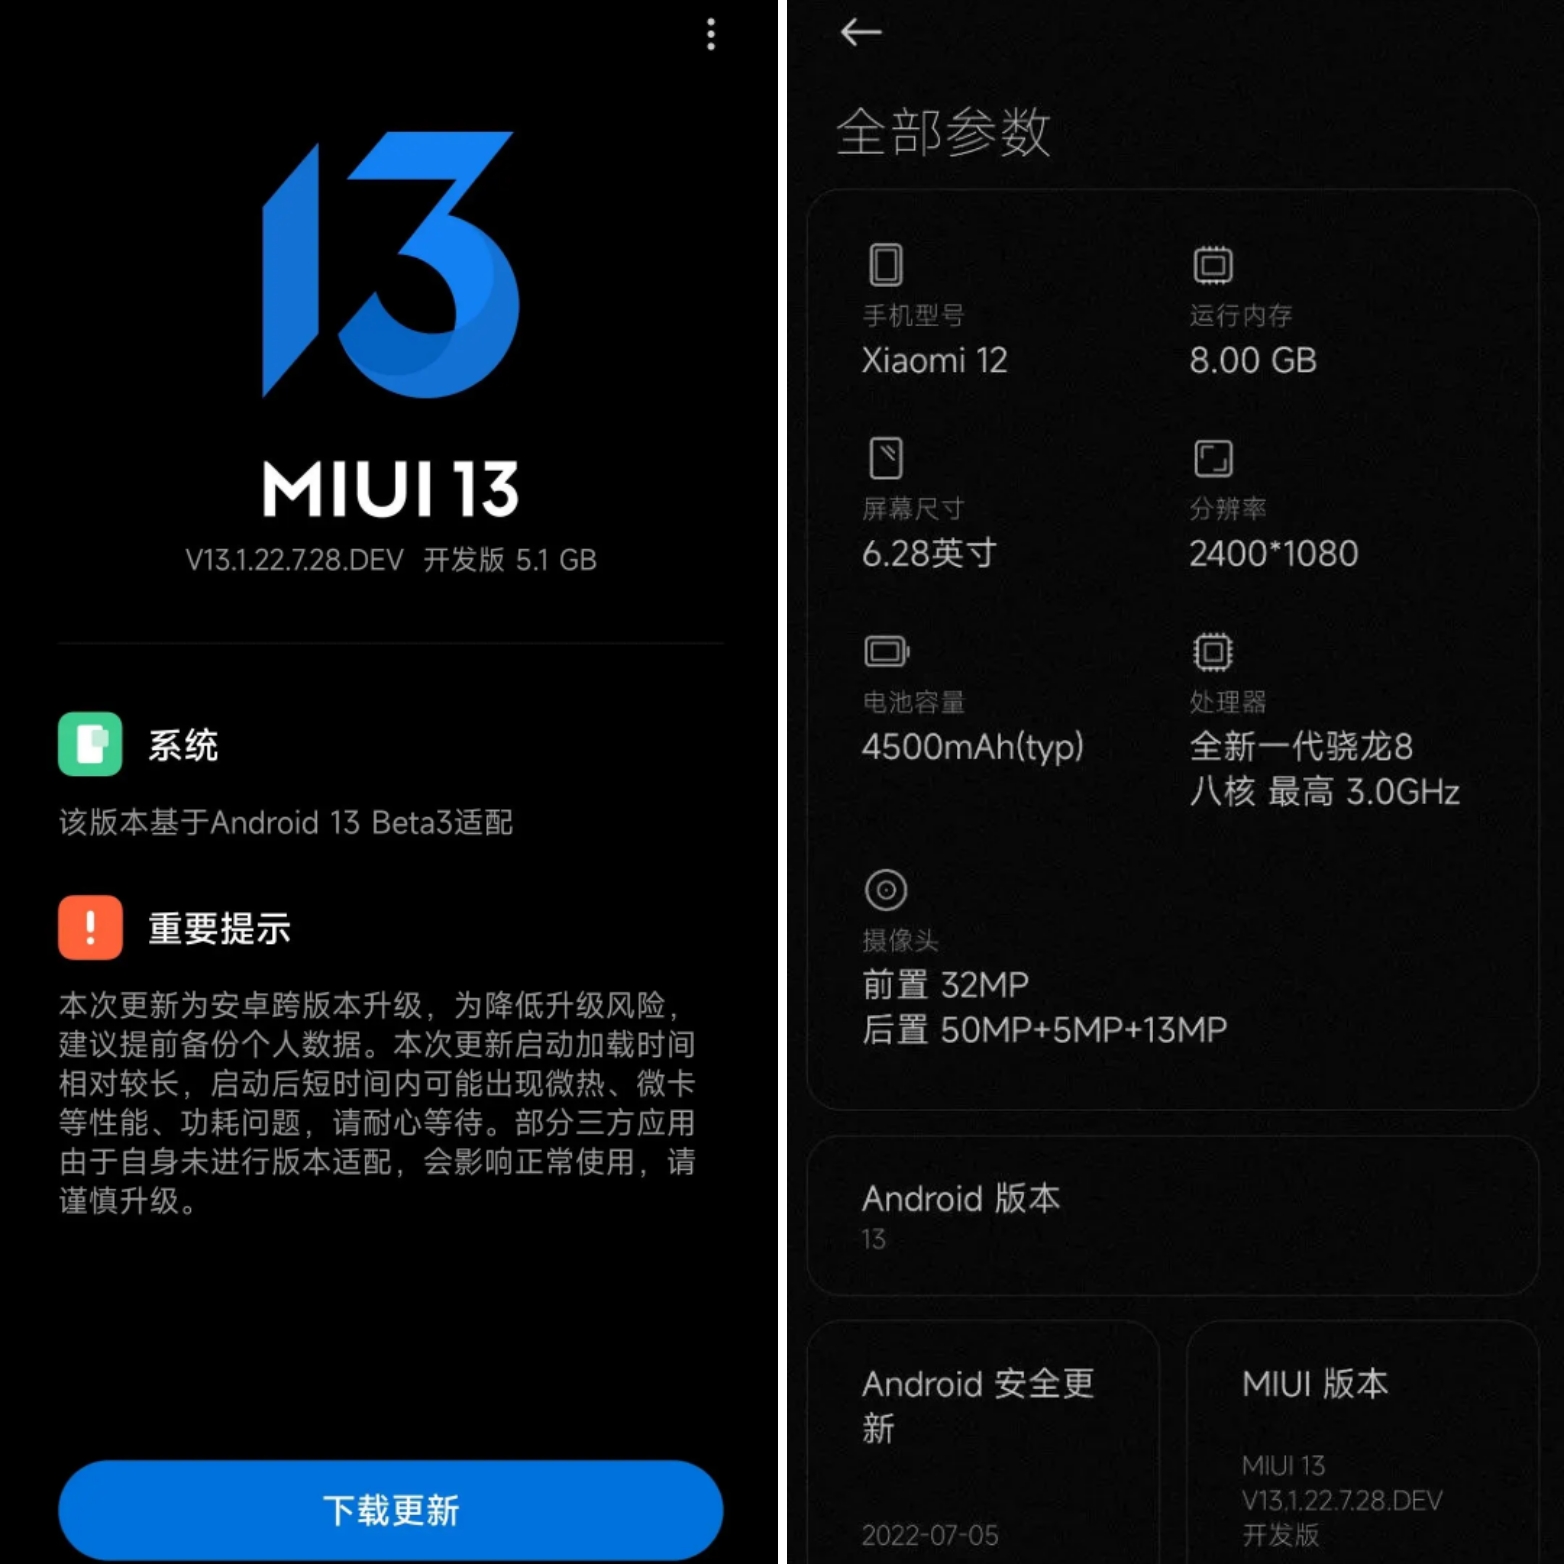 MIUI 13.1 Device List